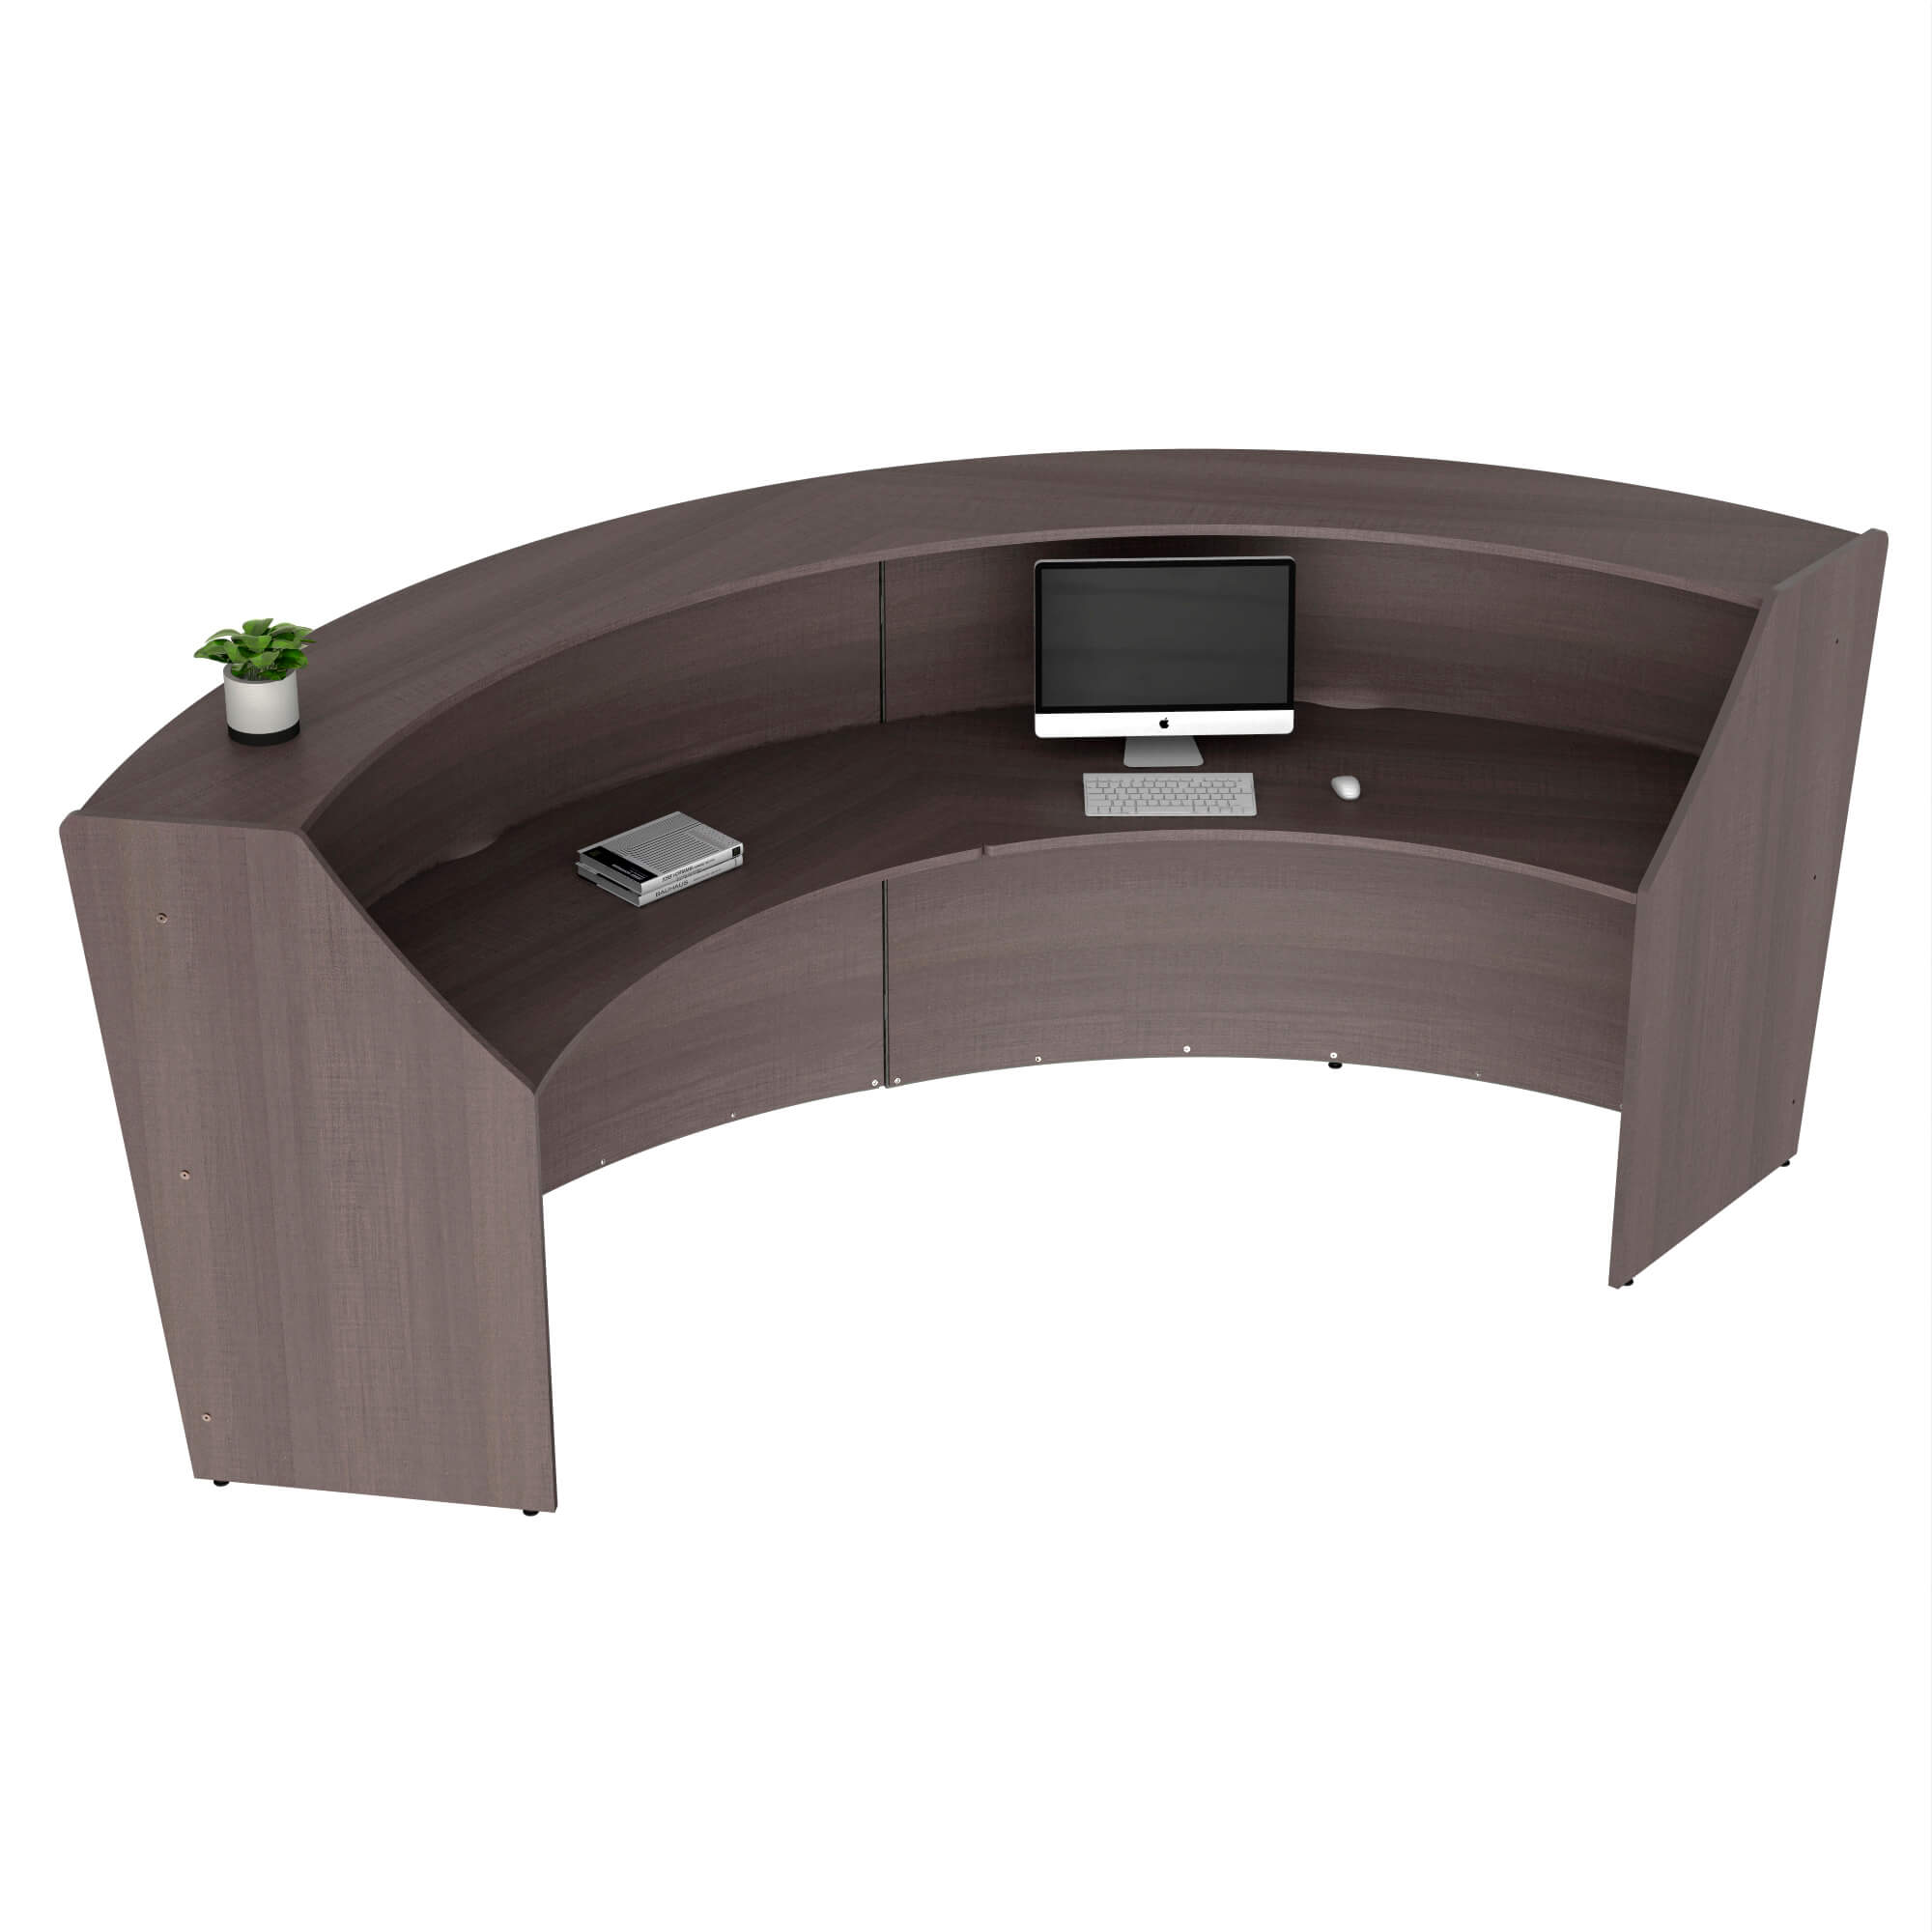 Li1 elegant modern reception desk inside view